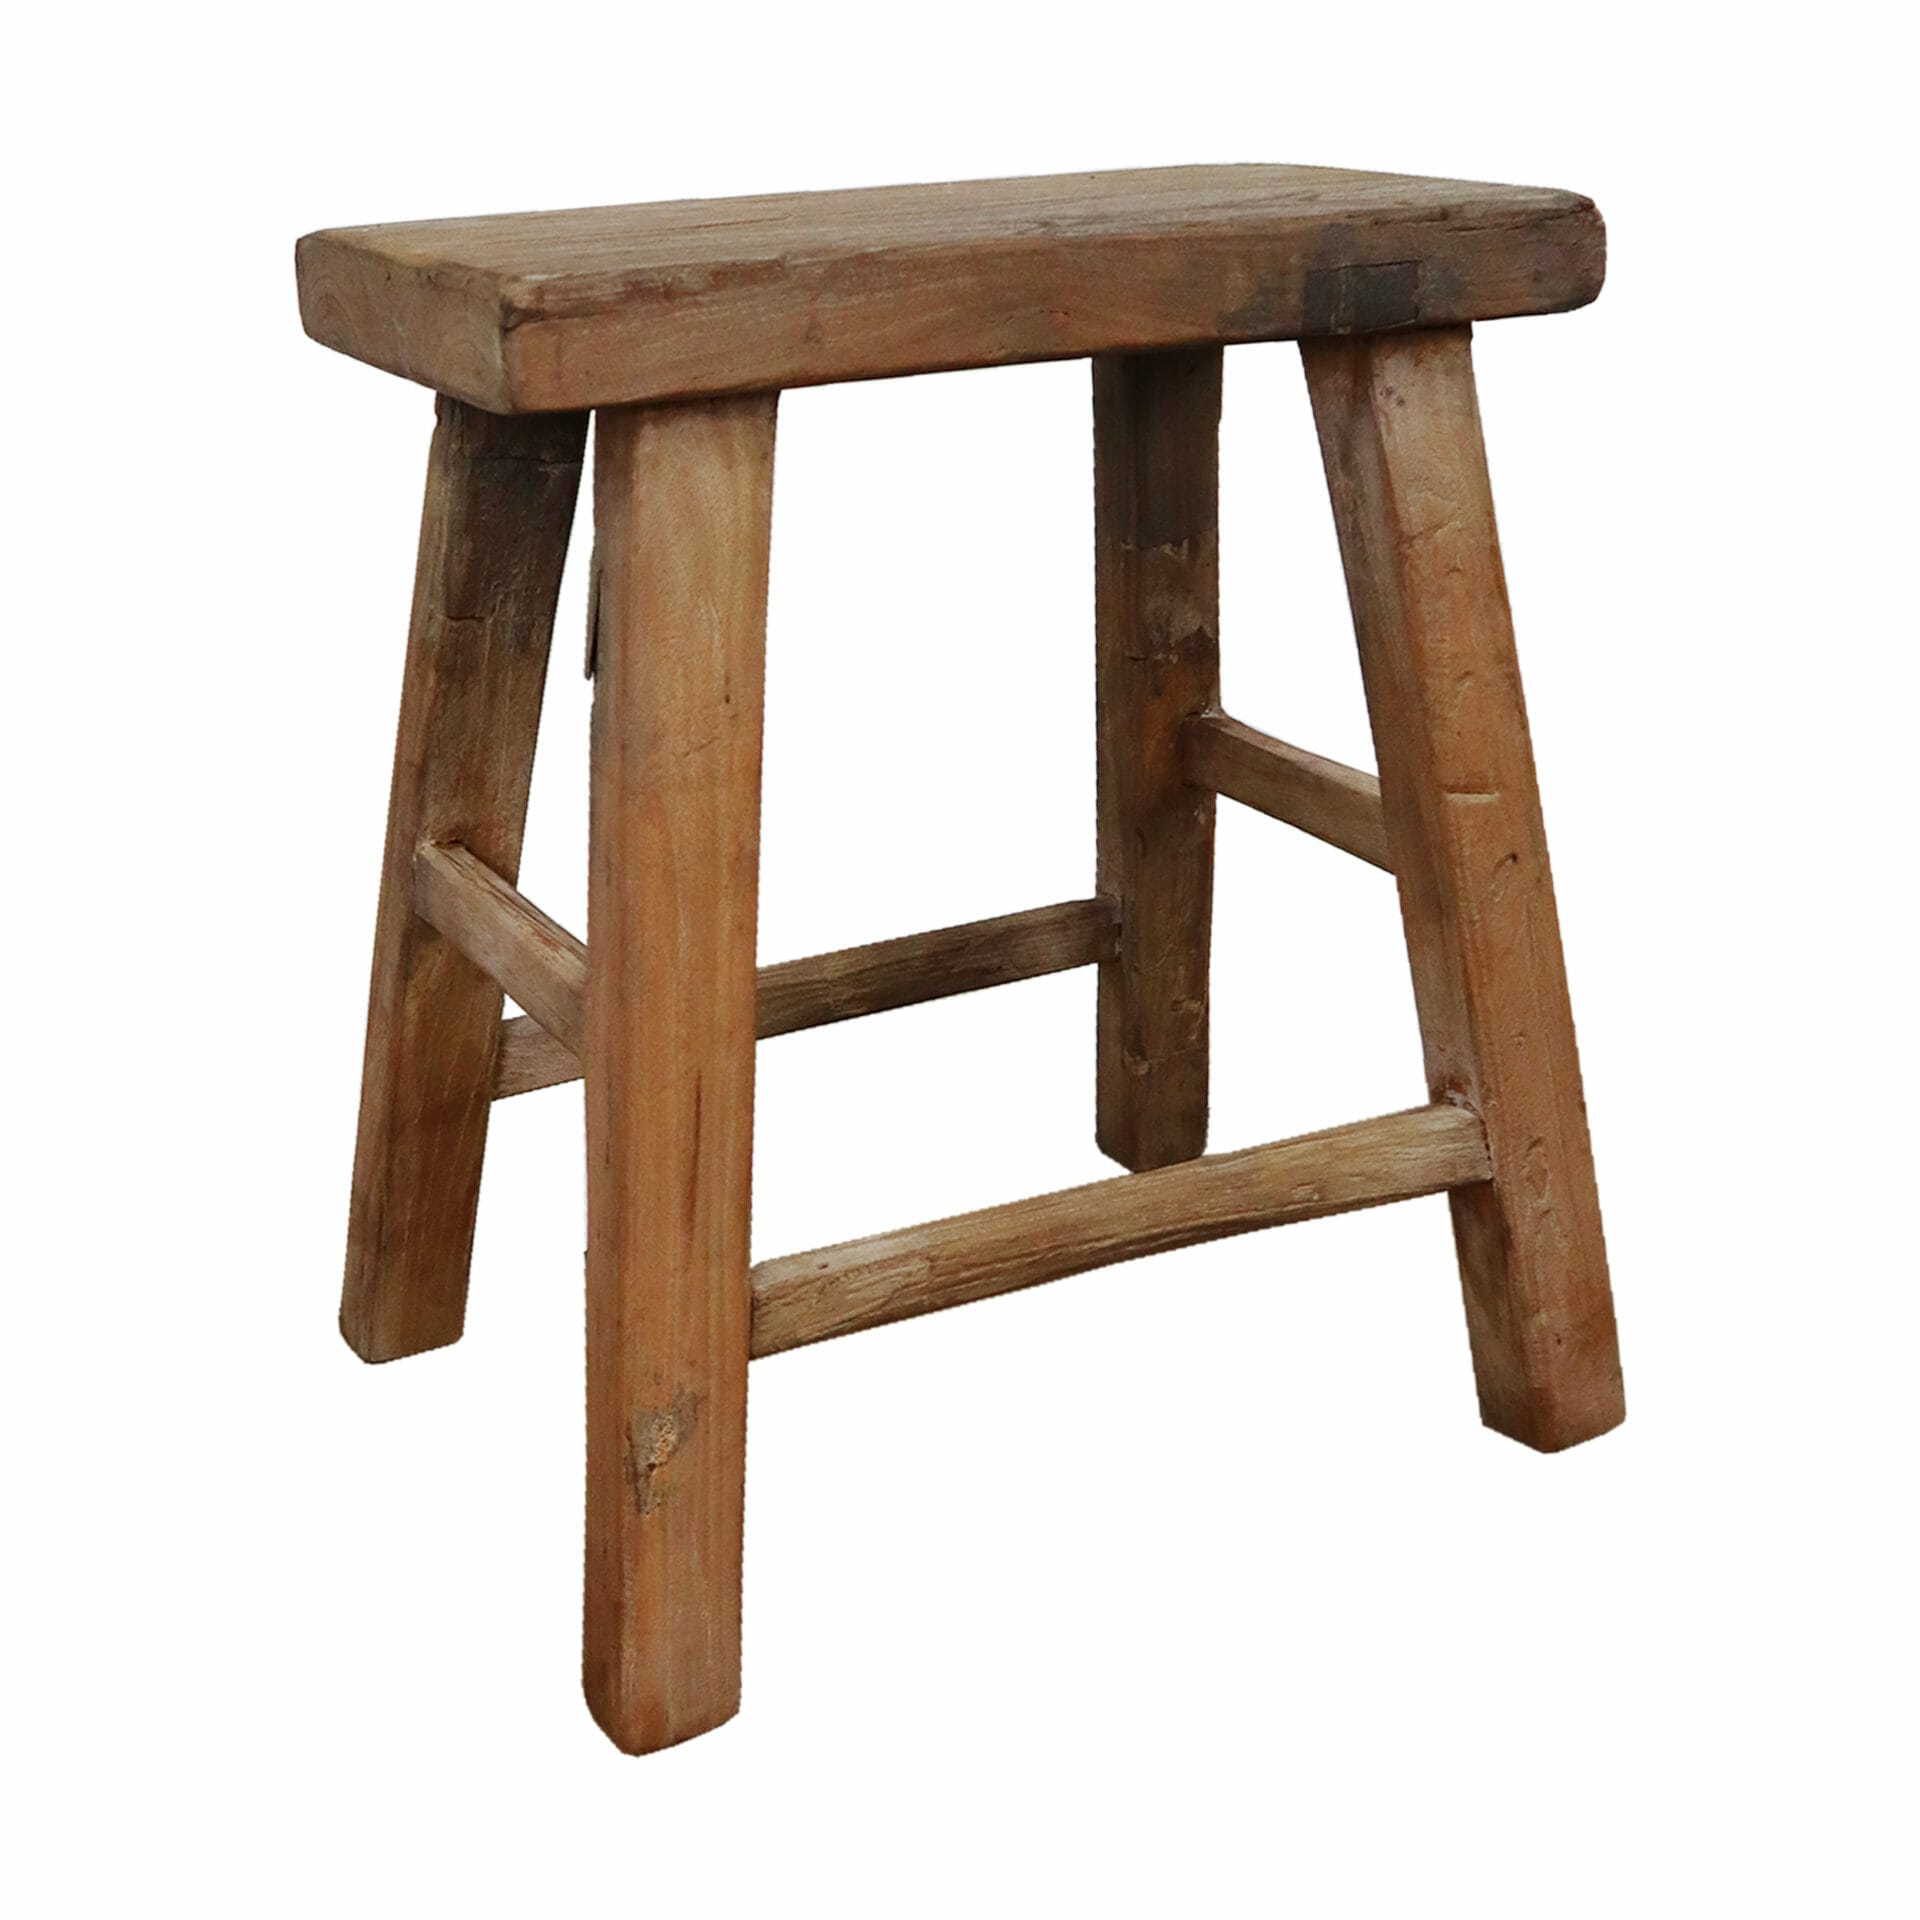 Rectangular elm wood handmade stool gothic finish rustic furniture